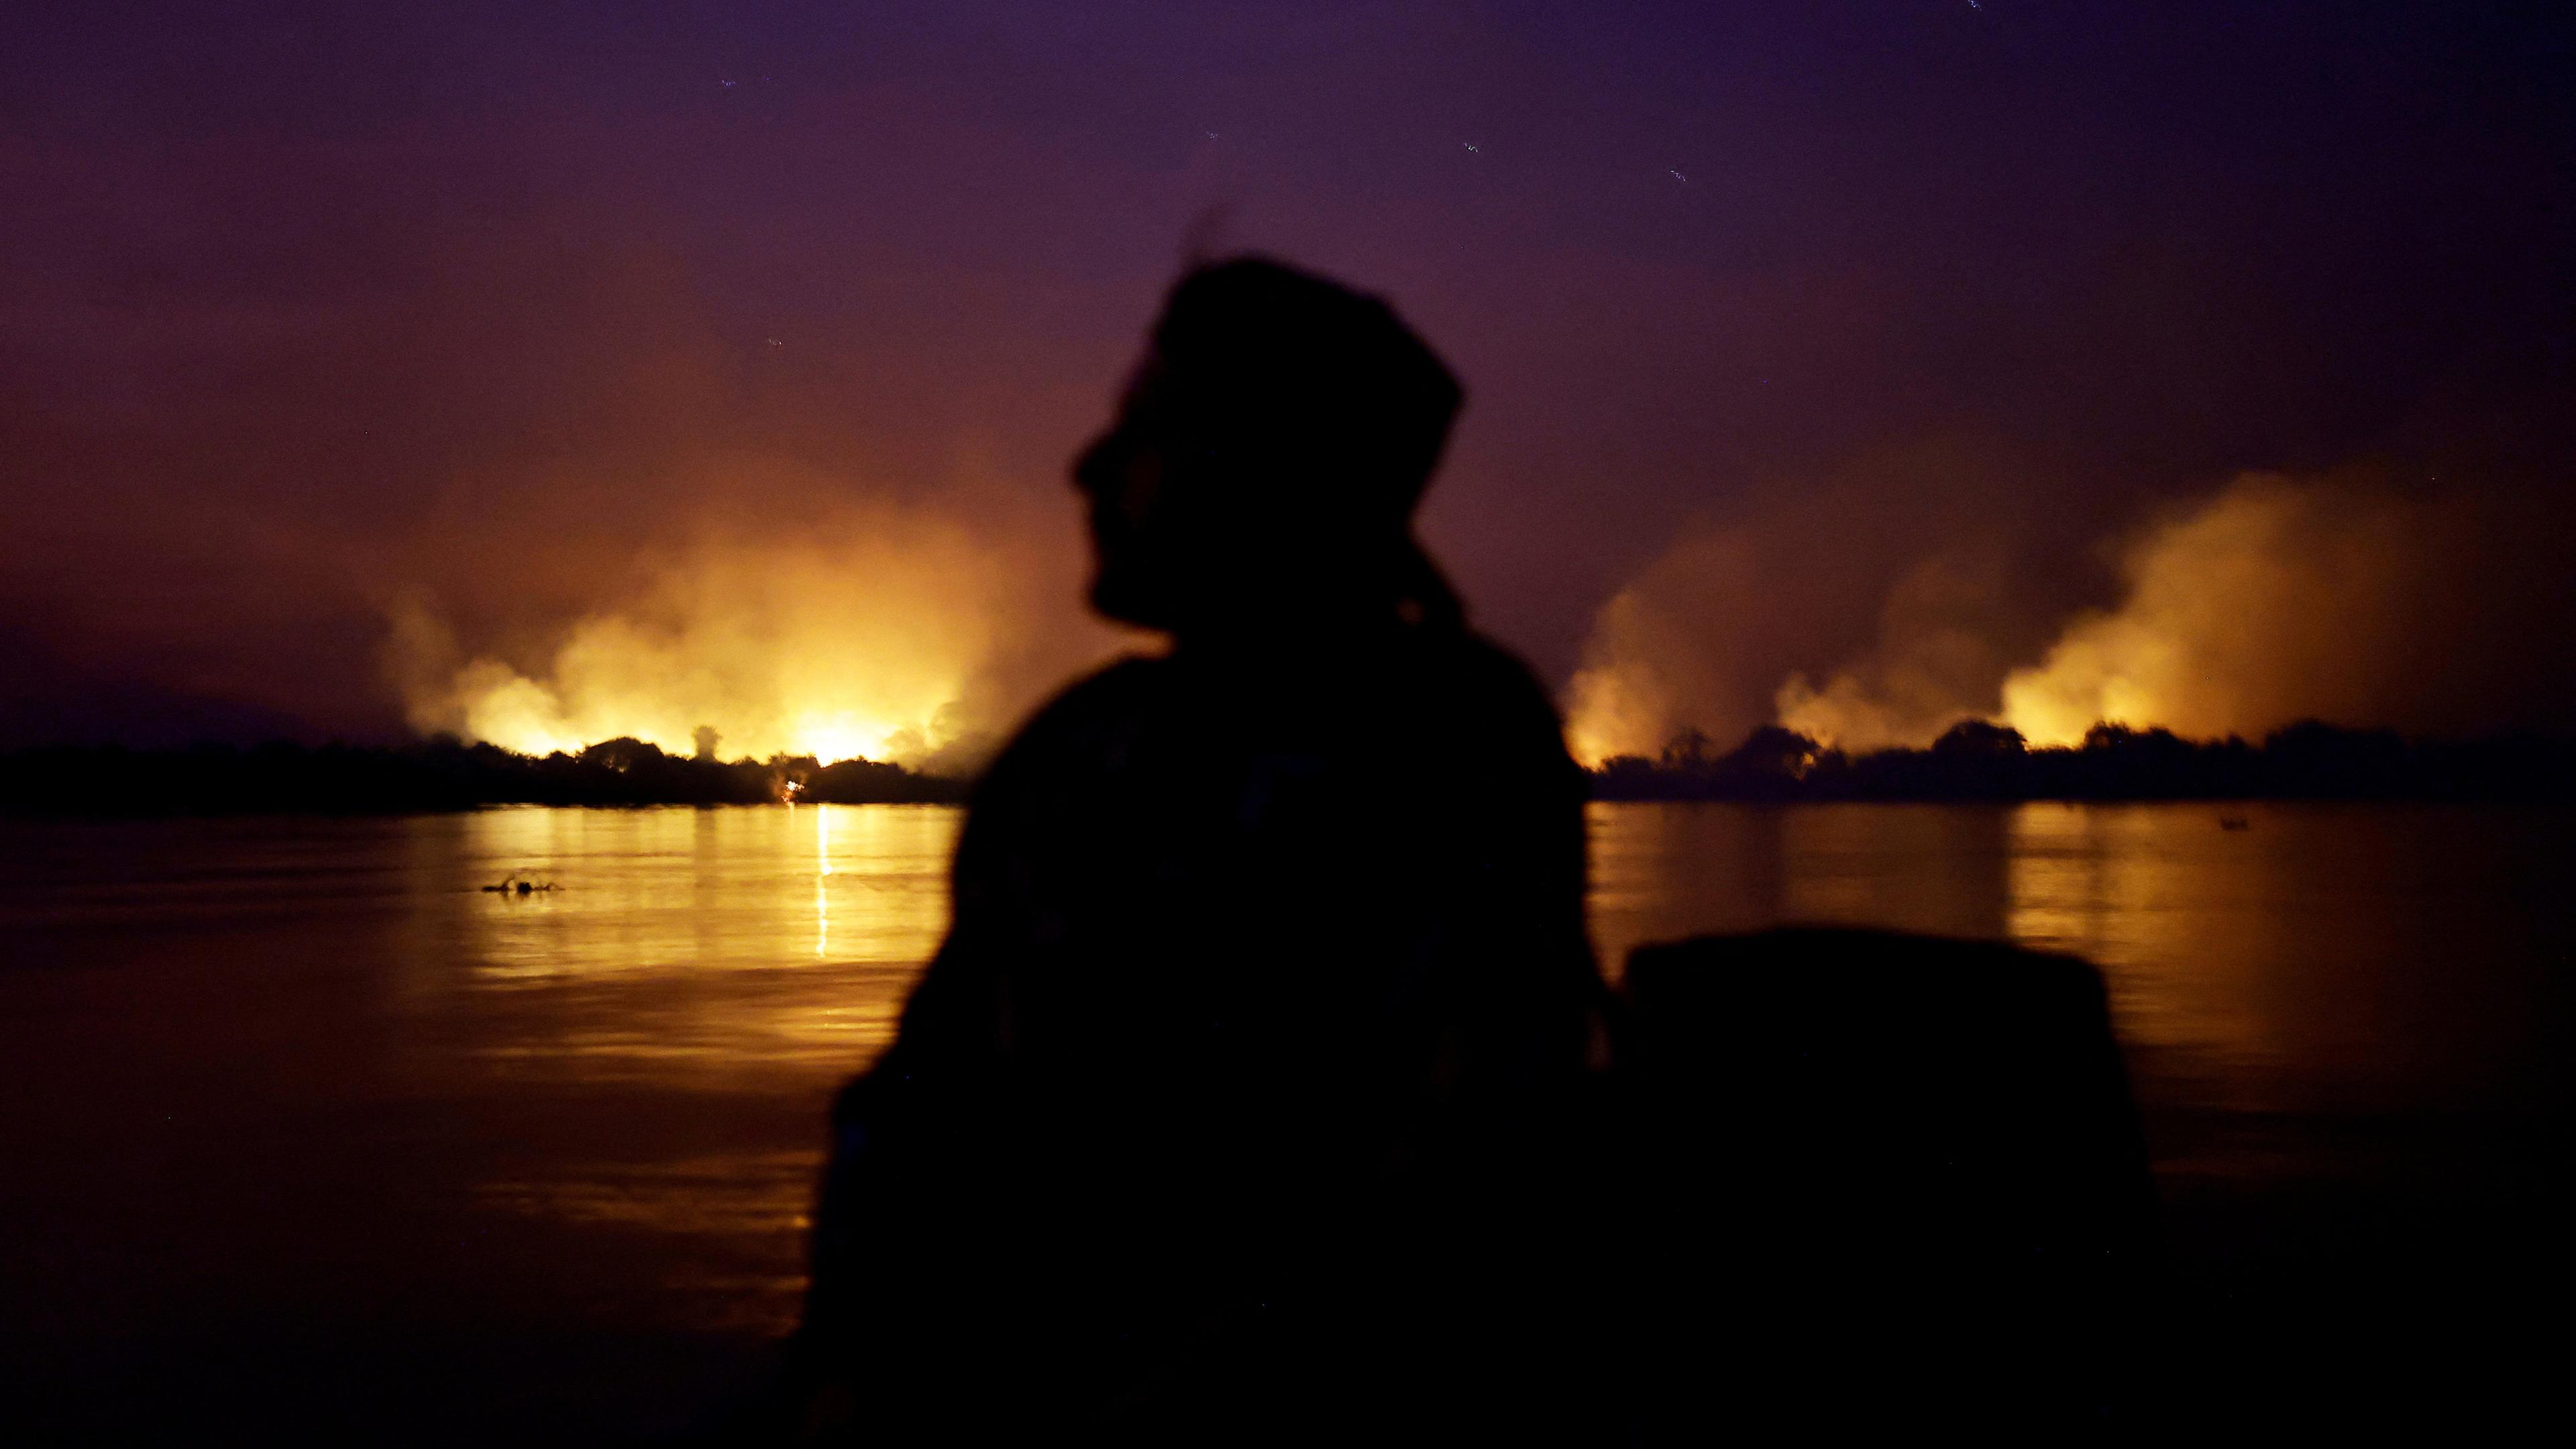 Brazil's tropical wetlands ablaze in massive fires